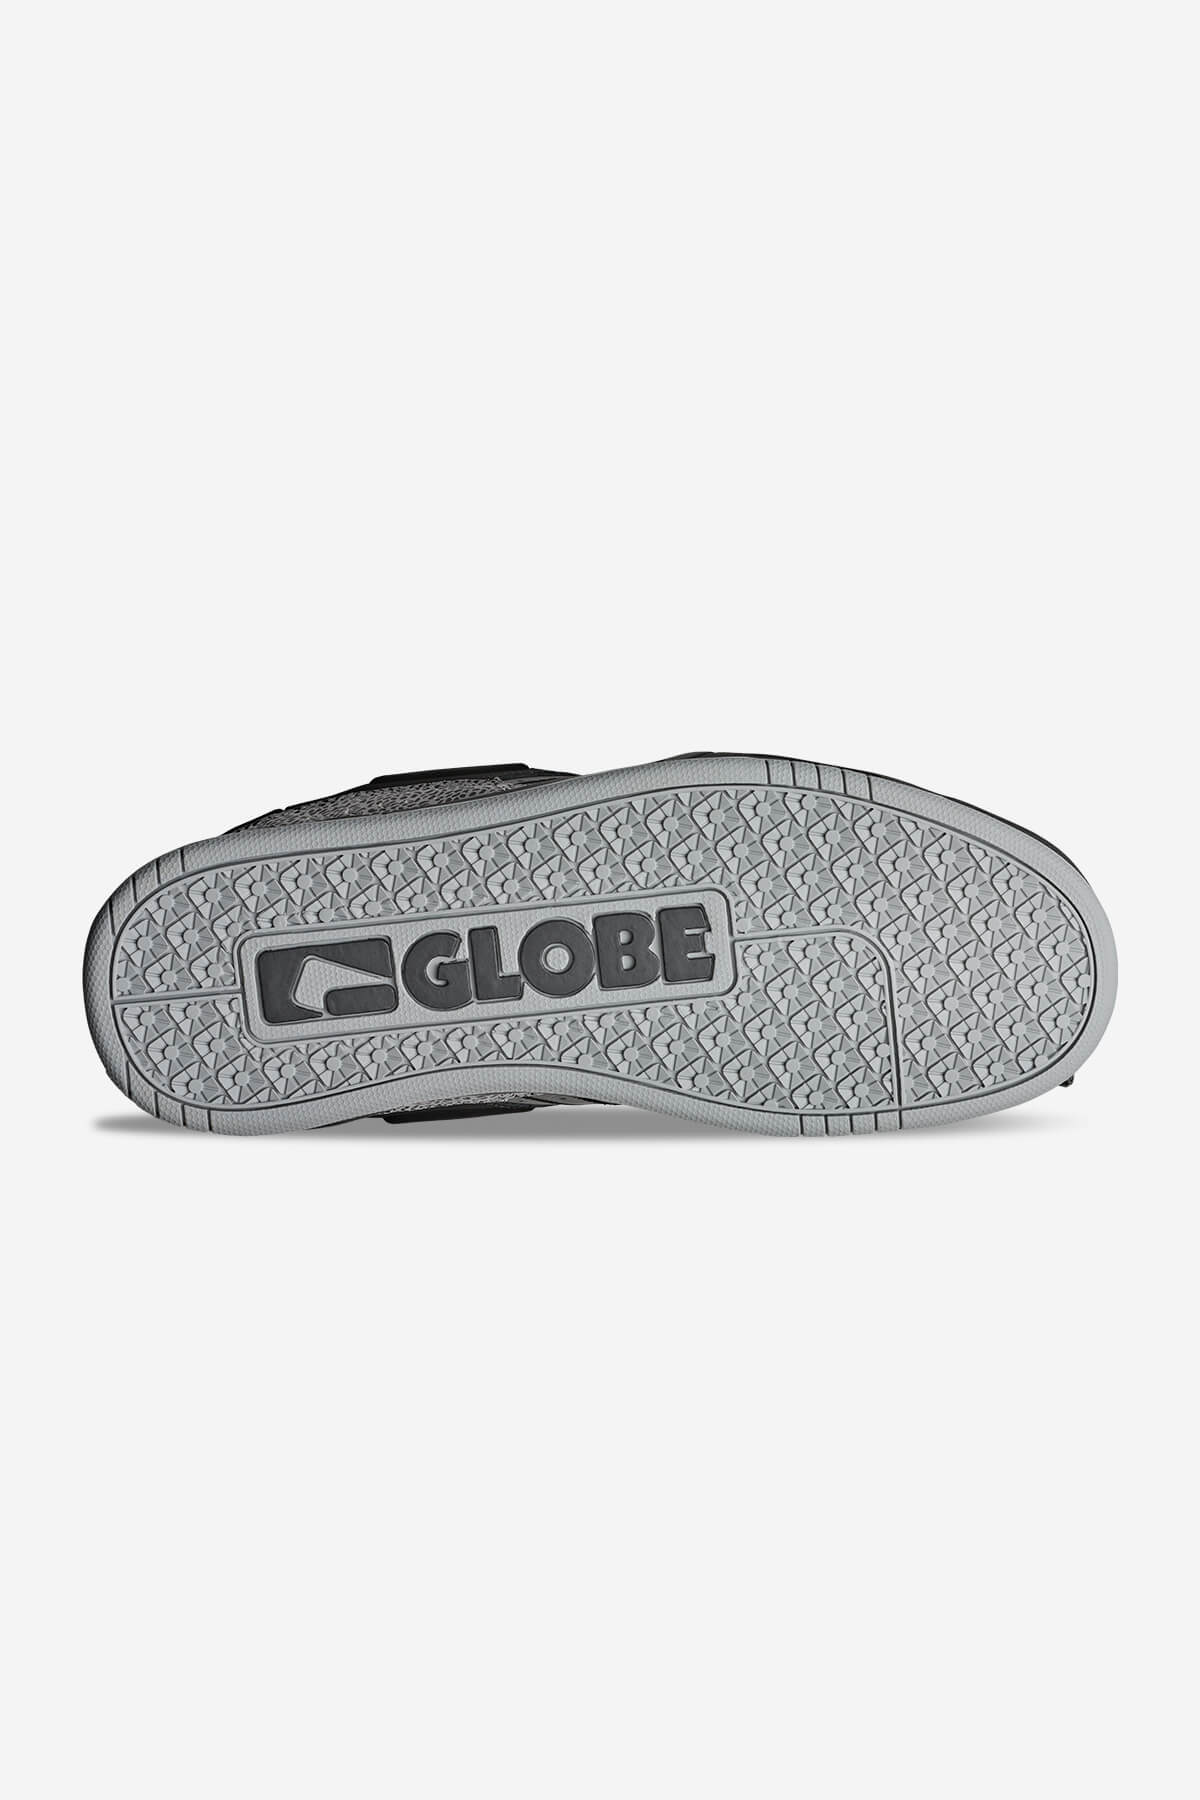 Globe Low shoes Fusion - Black/Grey Stipple in Black/Grey Stipple